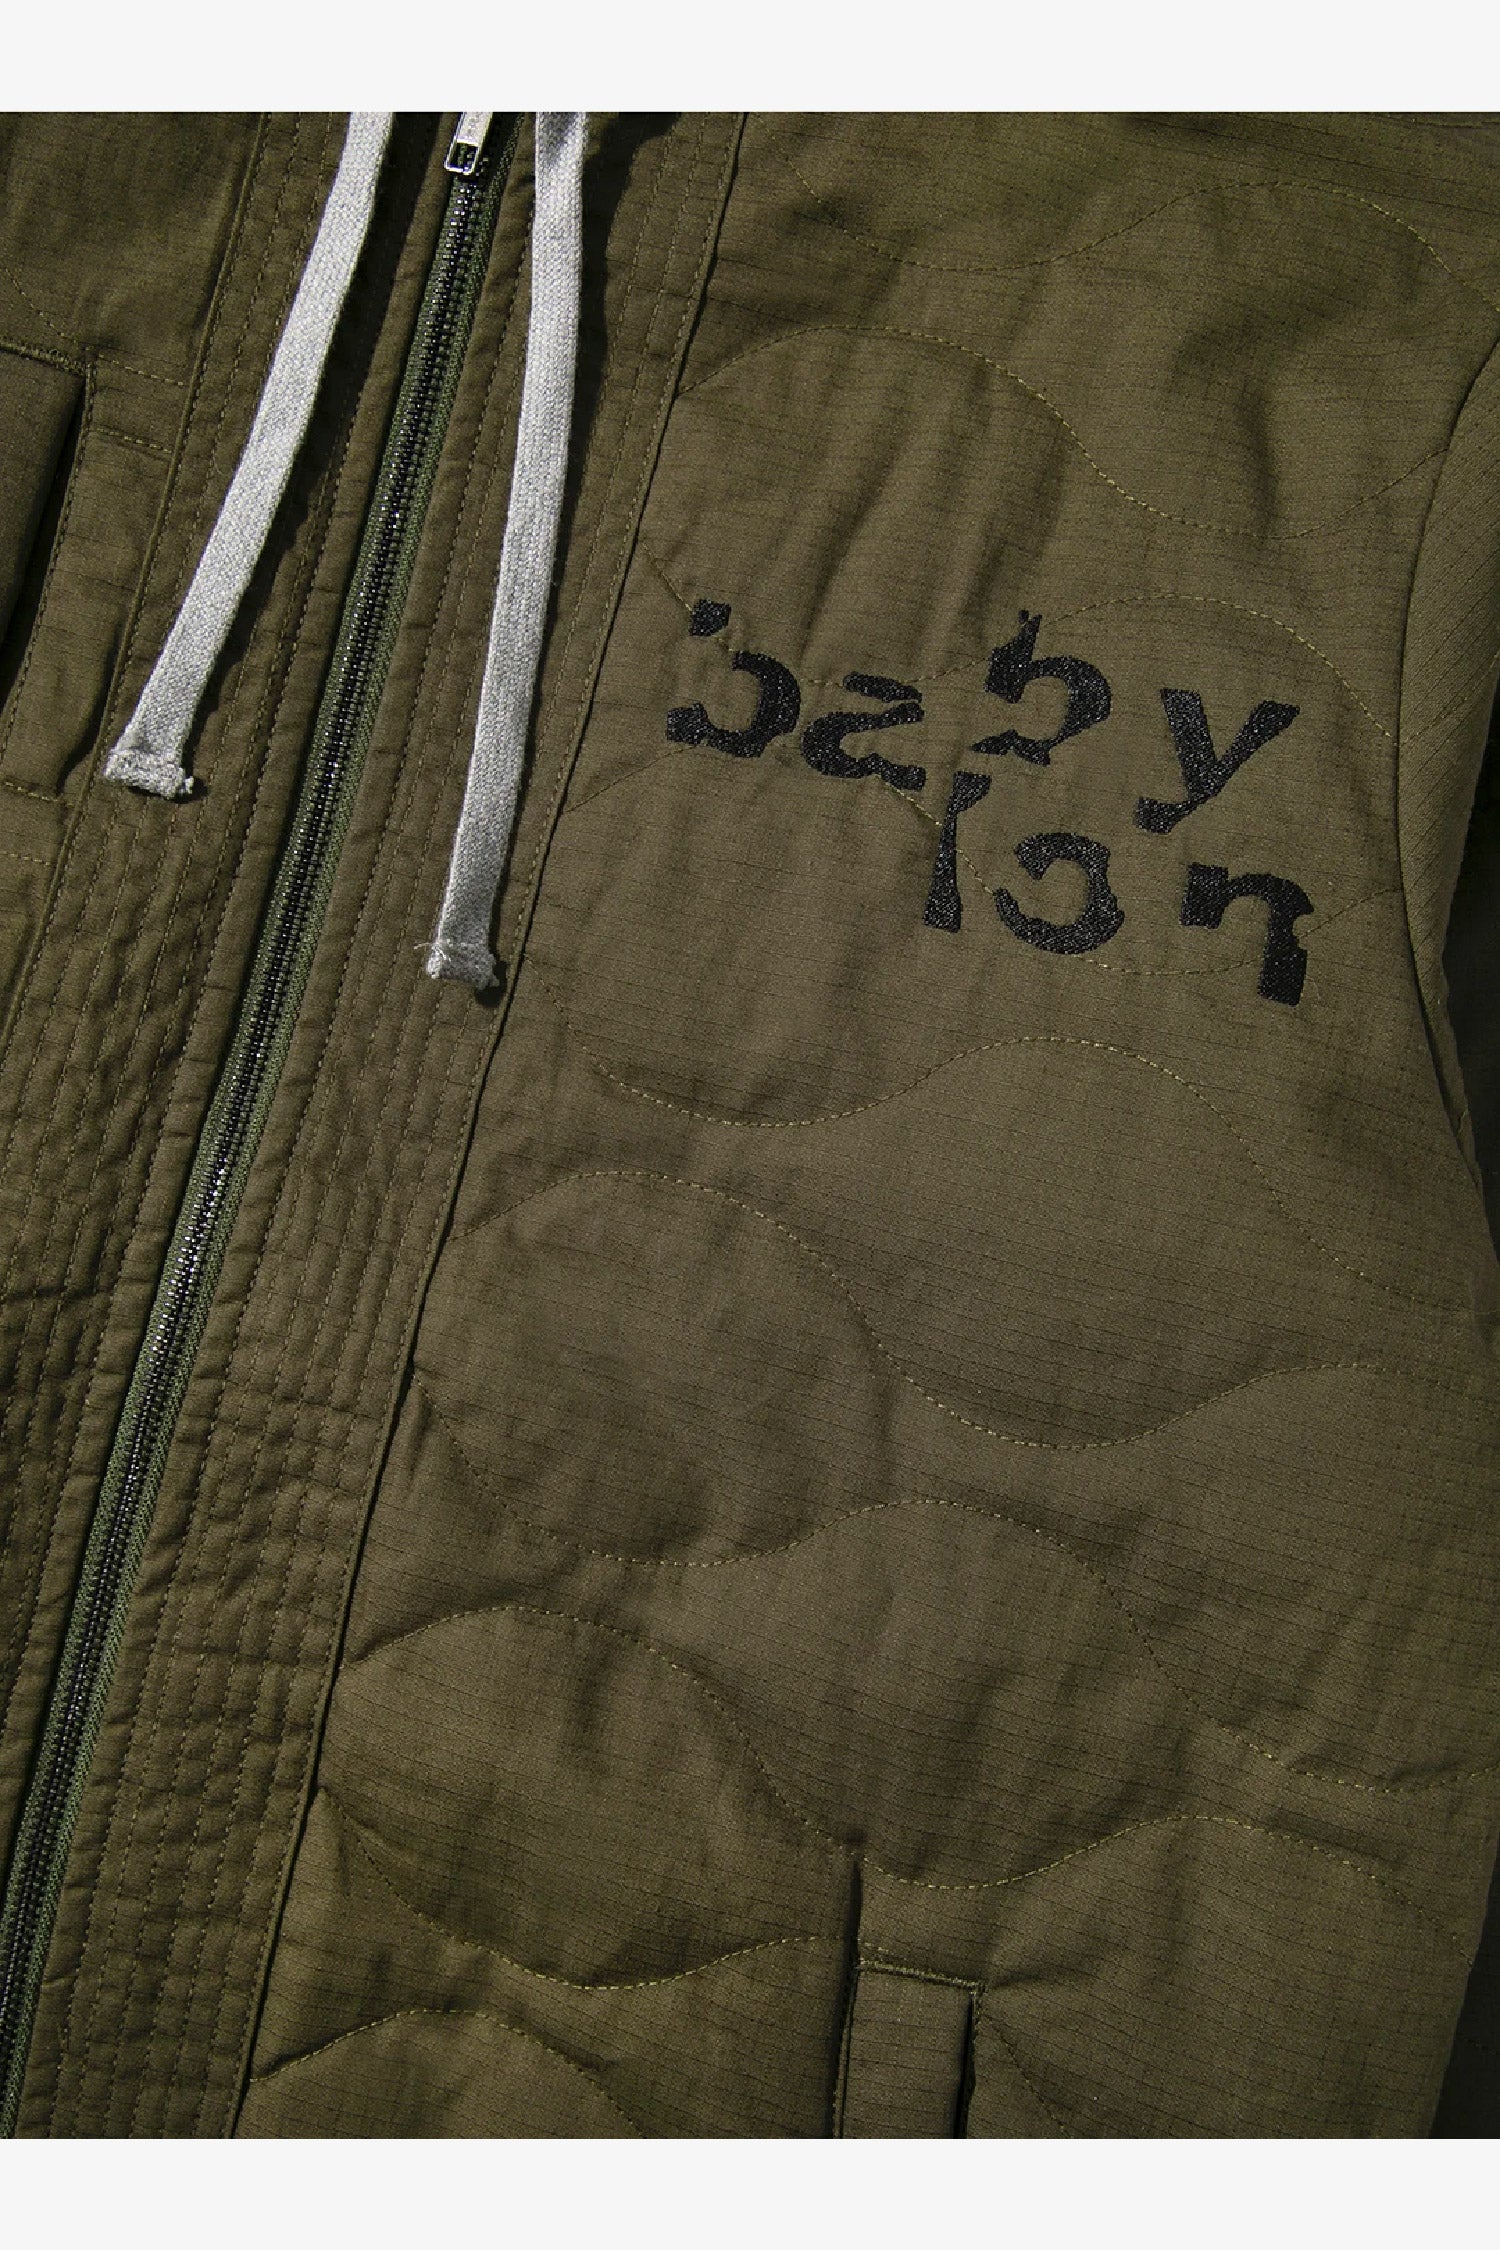 Selectshop FRAME - BABYLON Dissolve Ziphood Sweats-knits Dubai